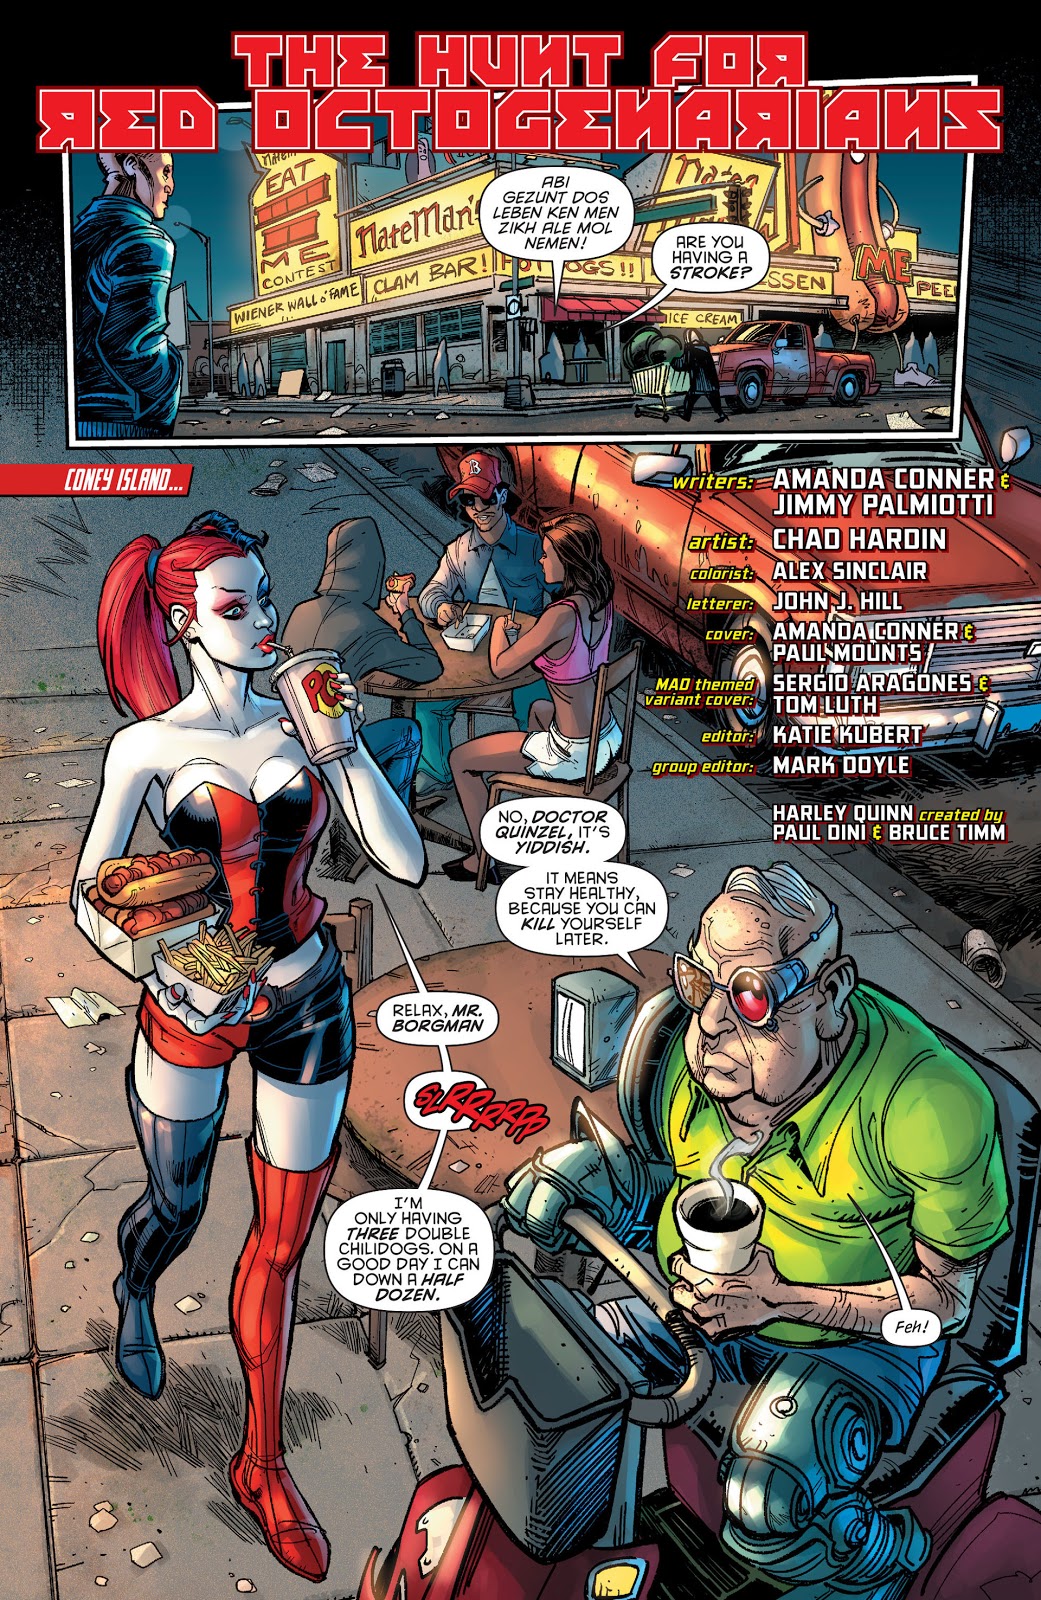 Harley Quinn Vol. 2 #5